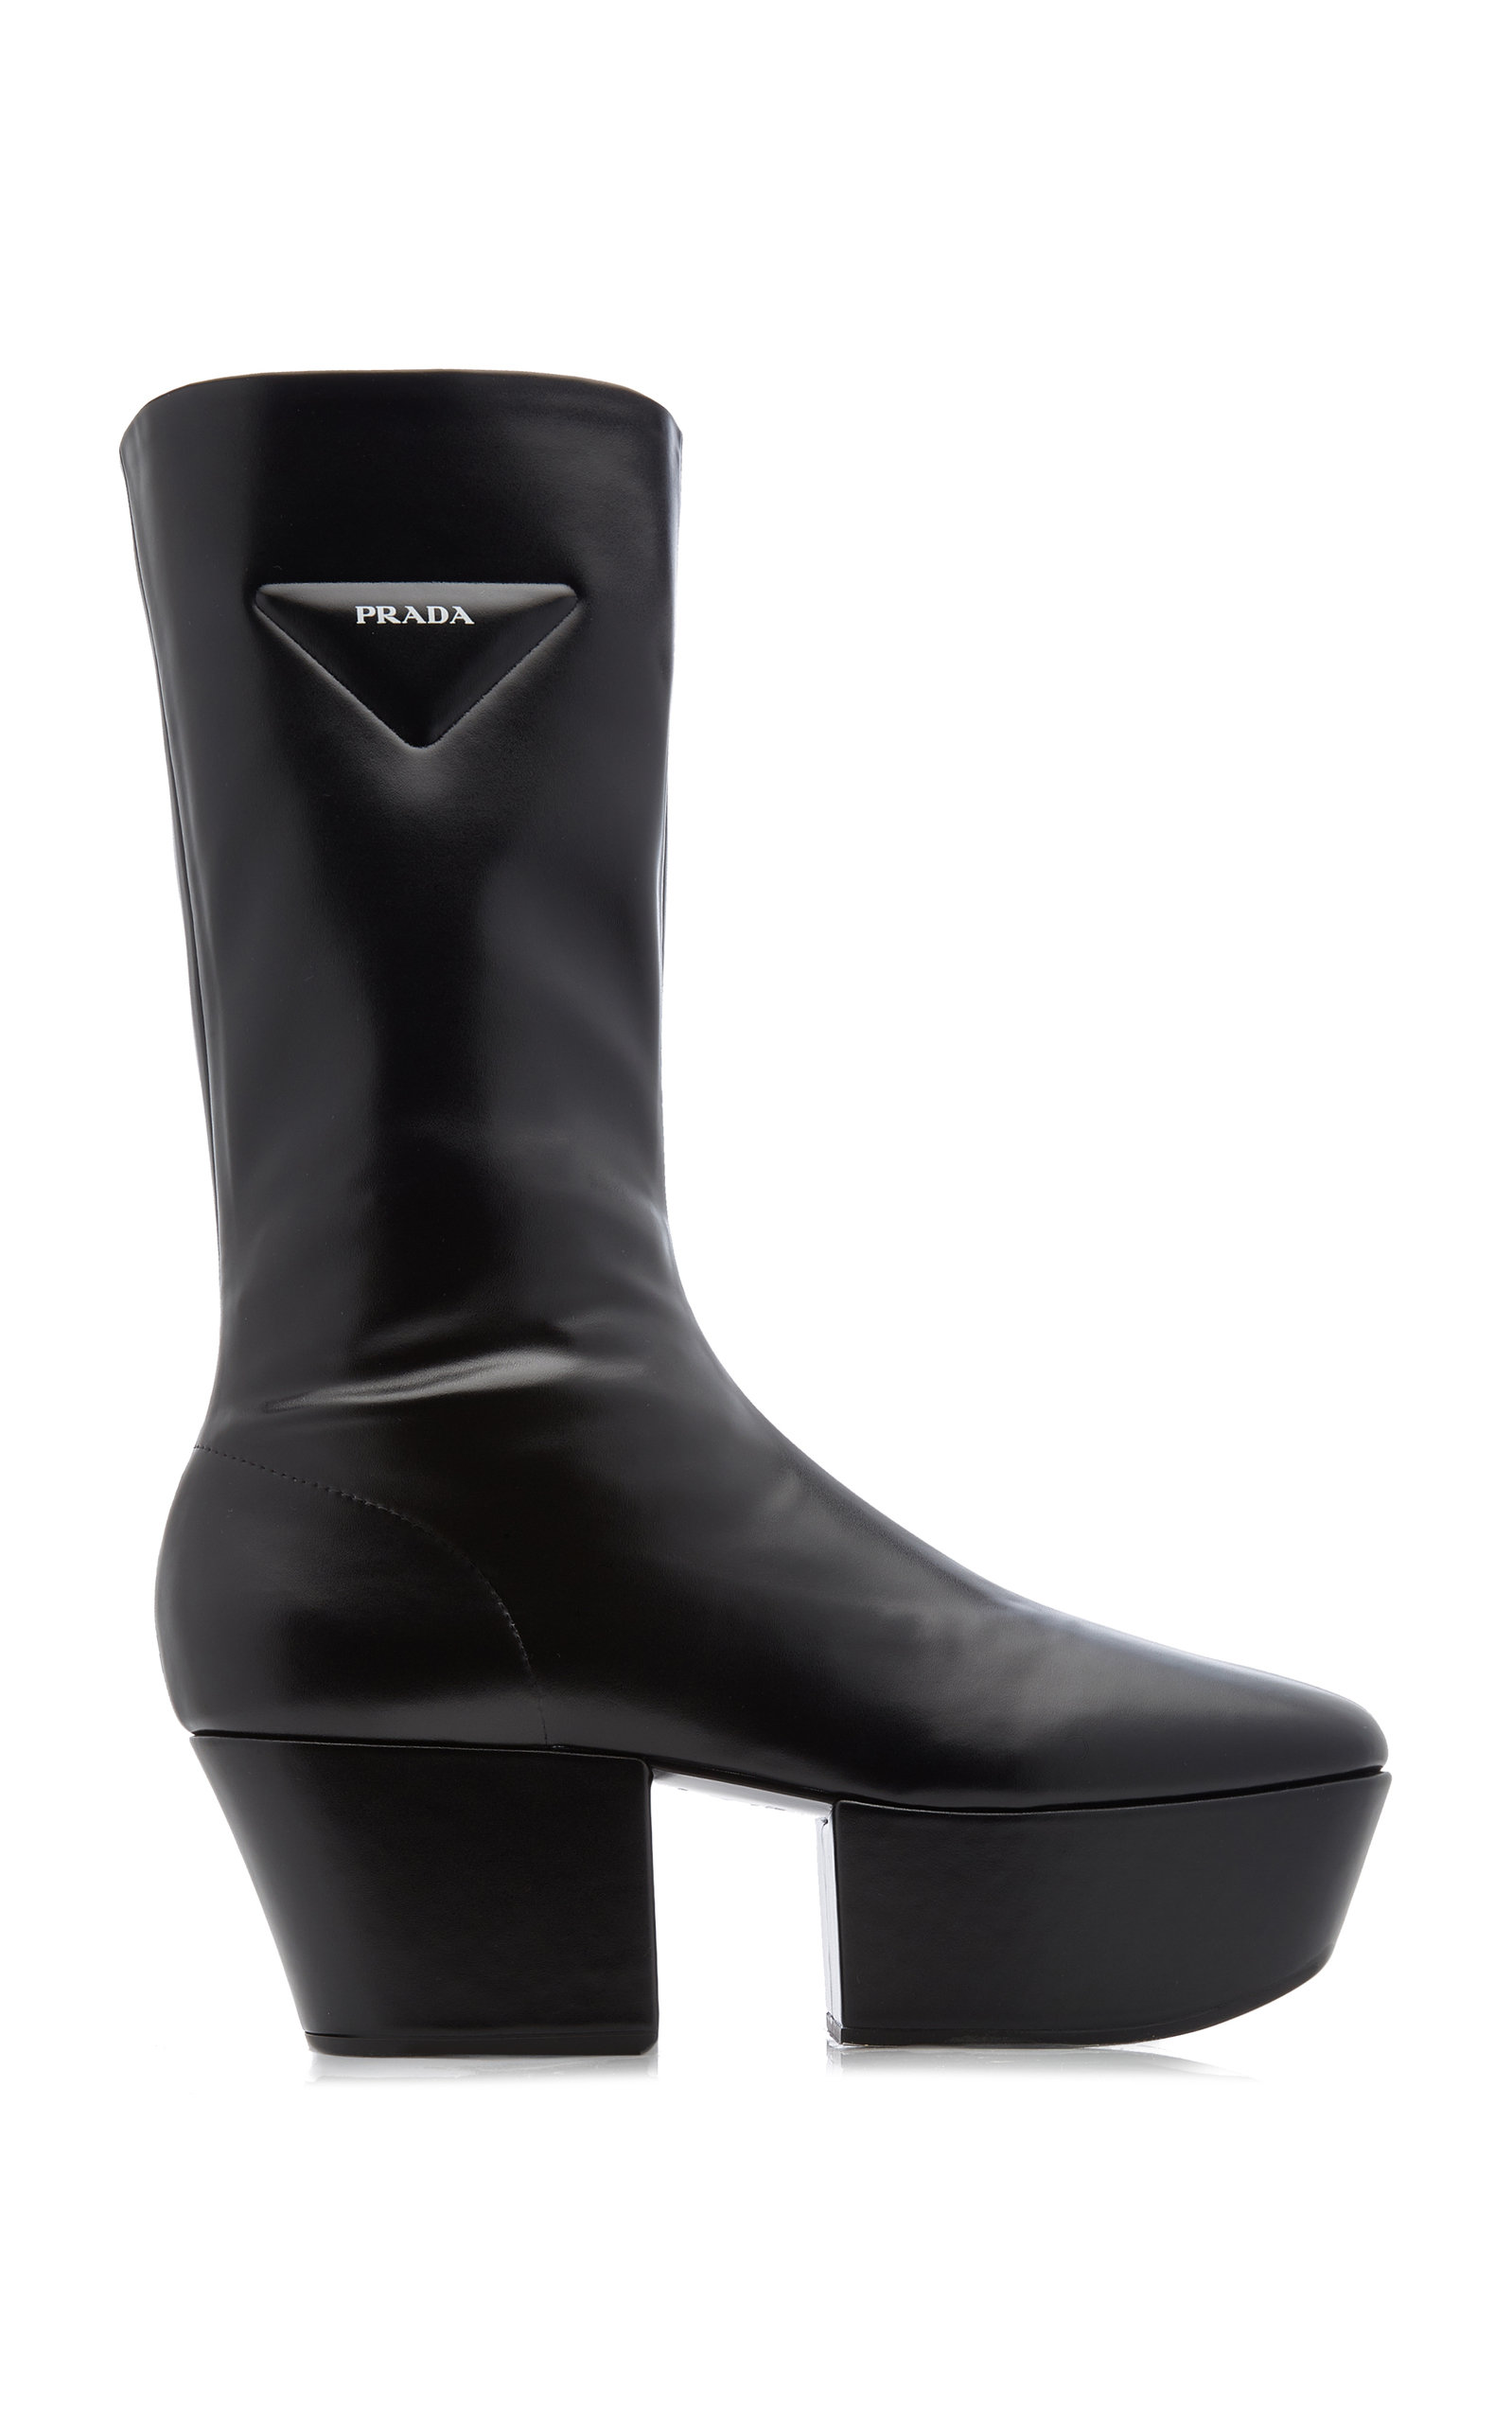 Prada - Women's Platform Stretch Leather Boots - Black/white - Moda Operandi